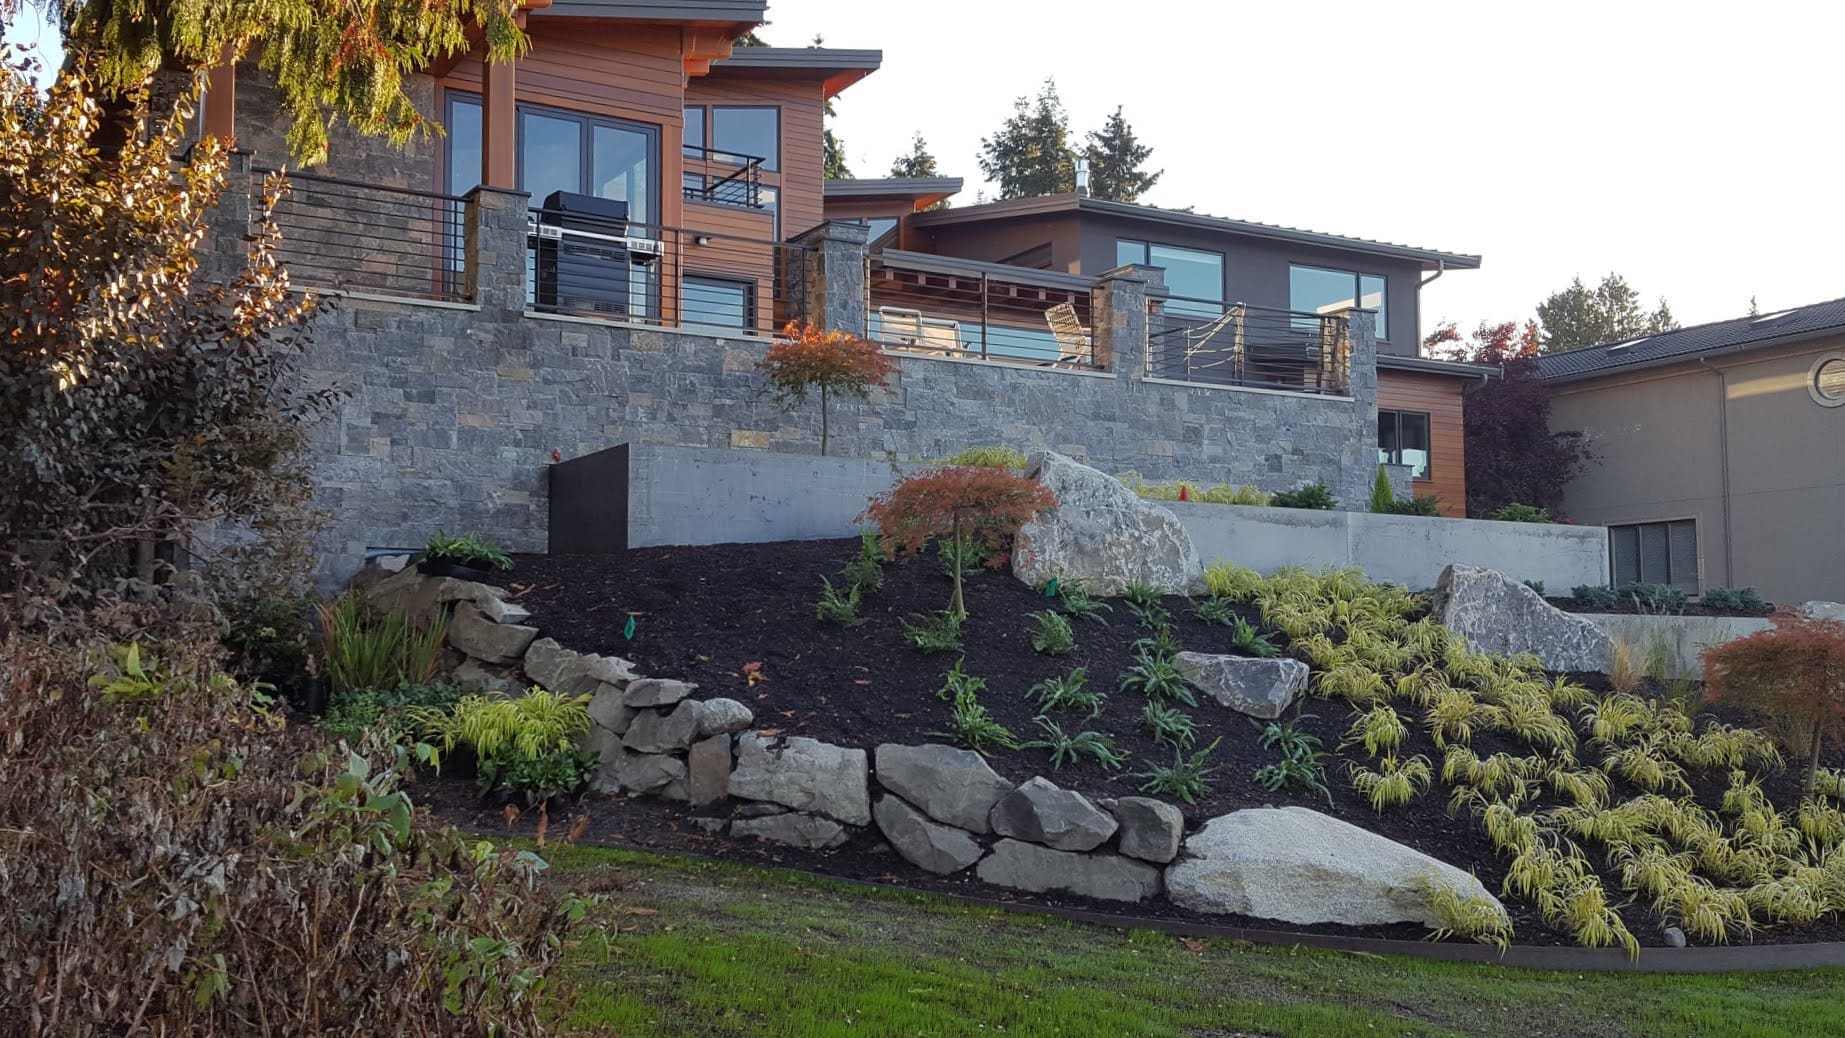 Vancouver Real Thin Stone Veneer Exterior